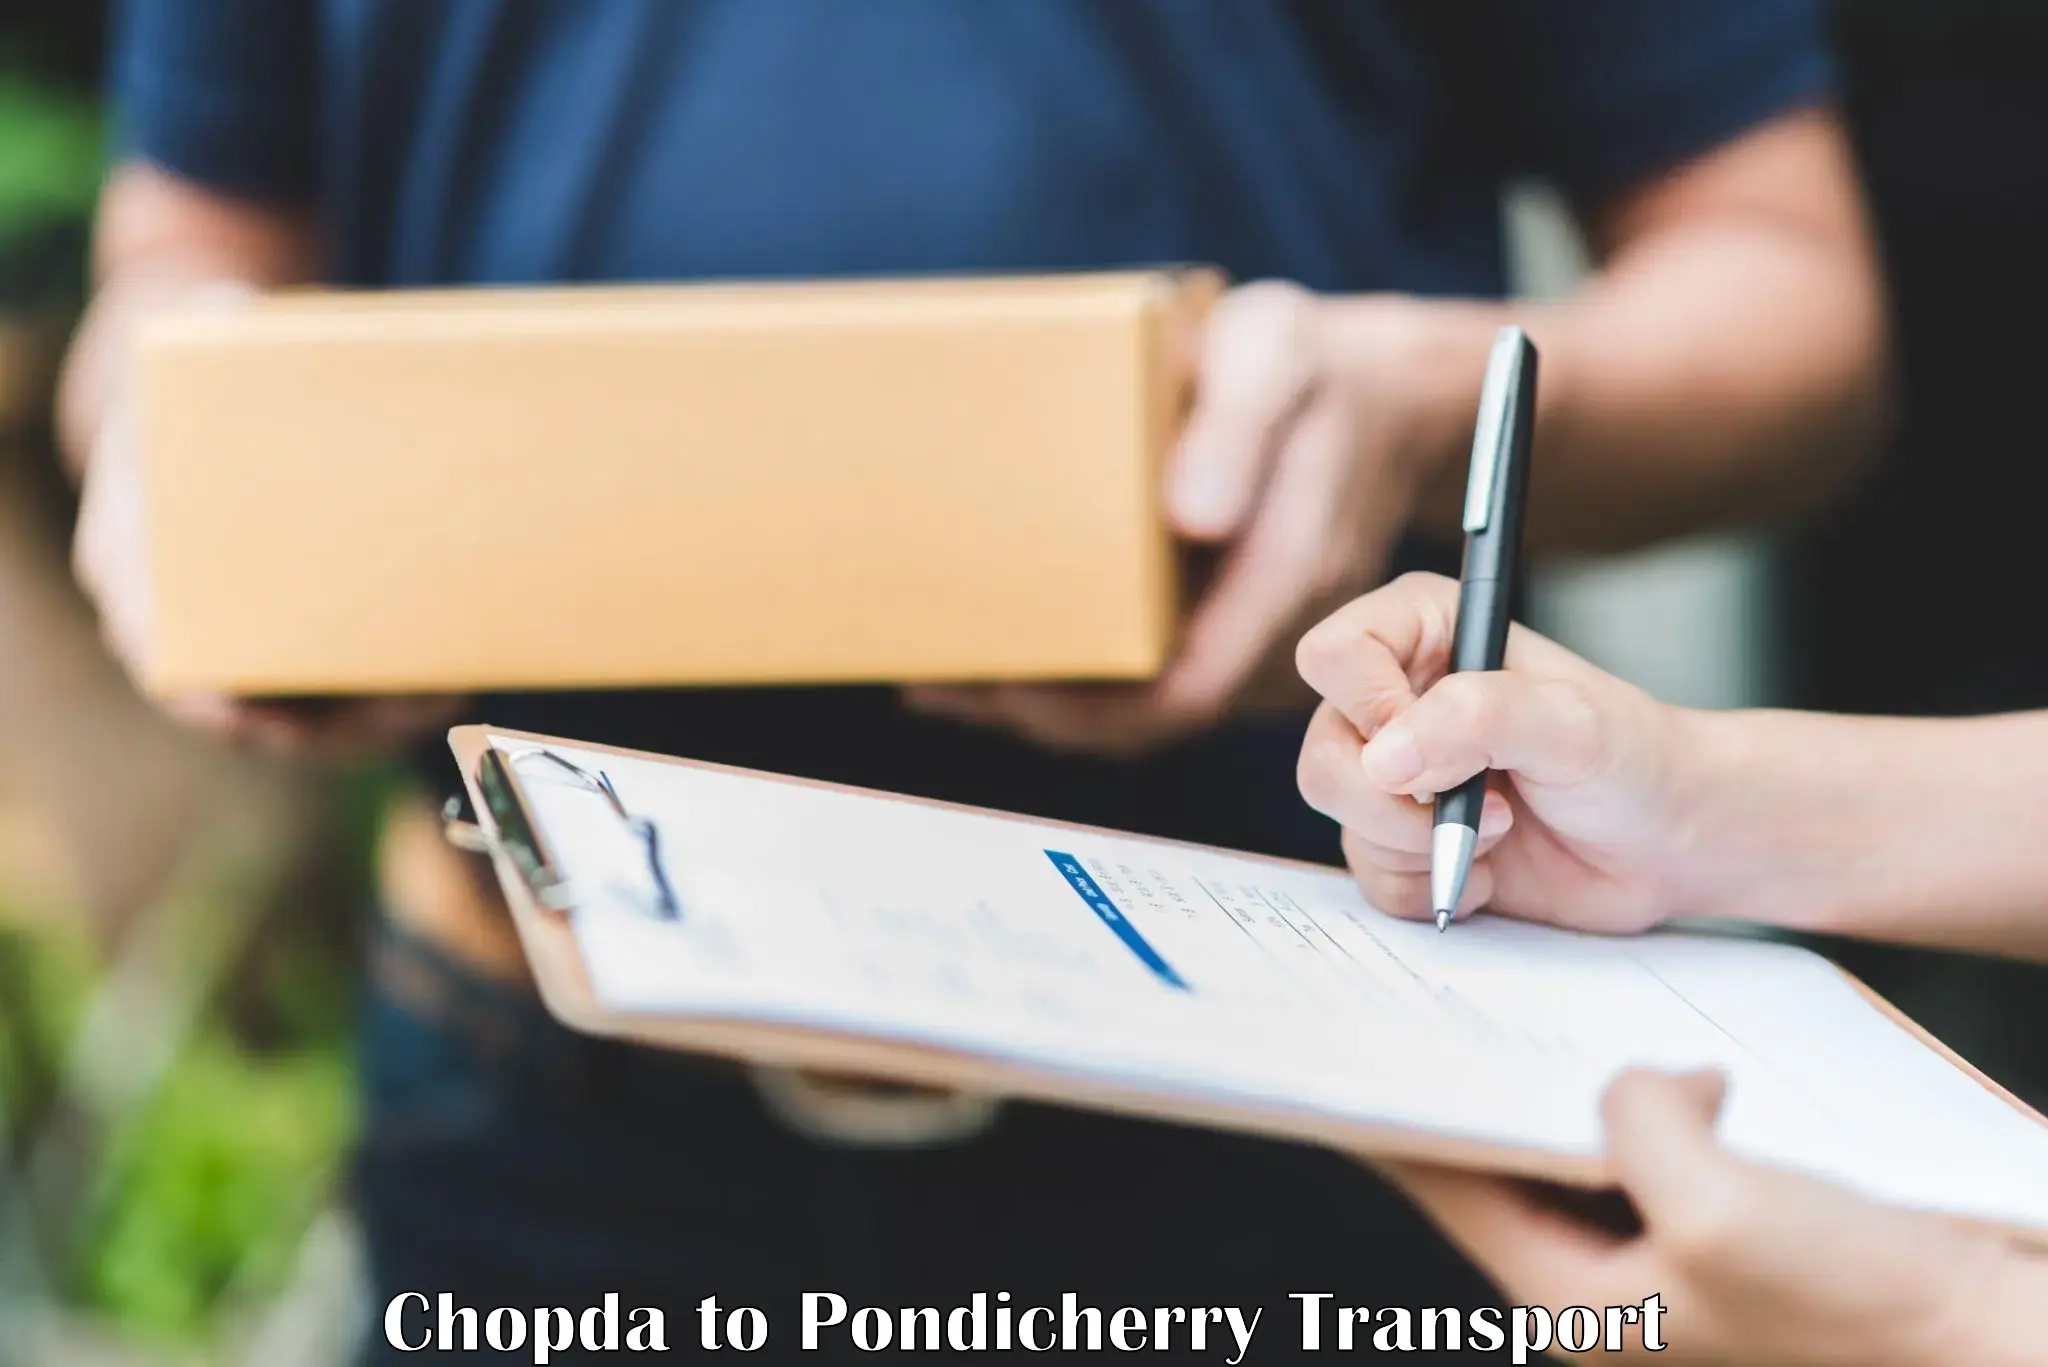 Transport in sharing Chopda to Pondicherry